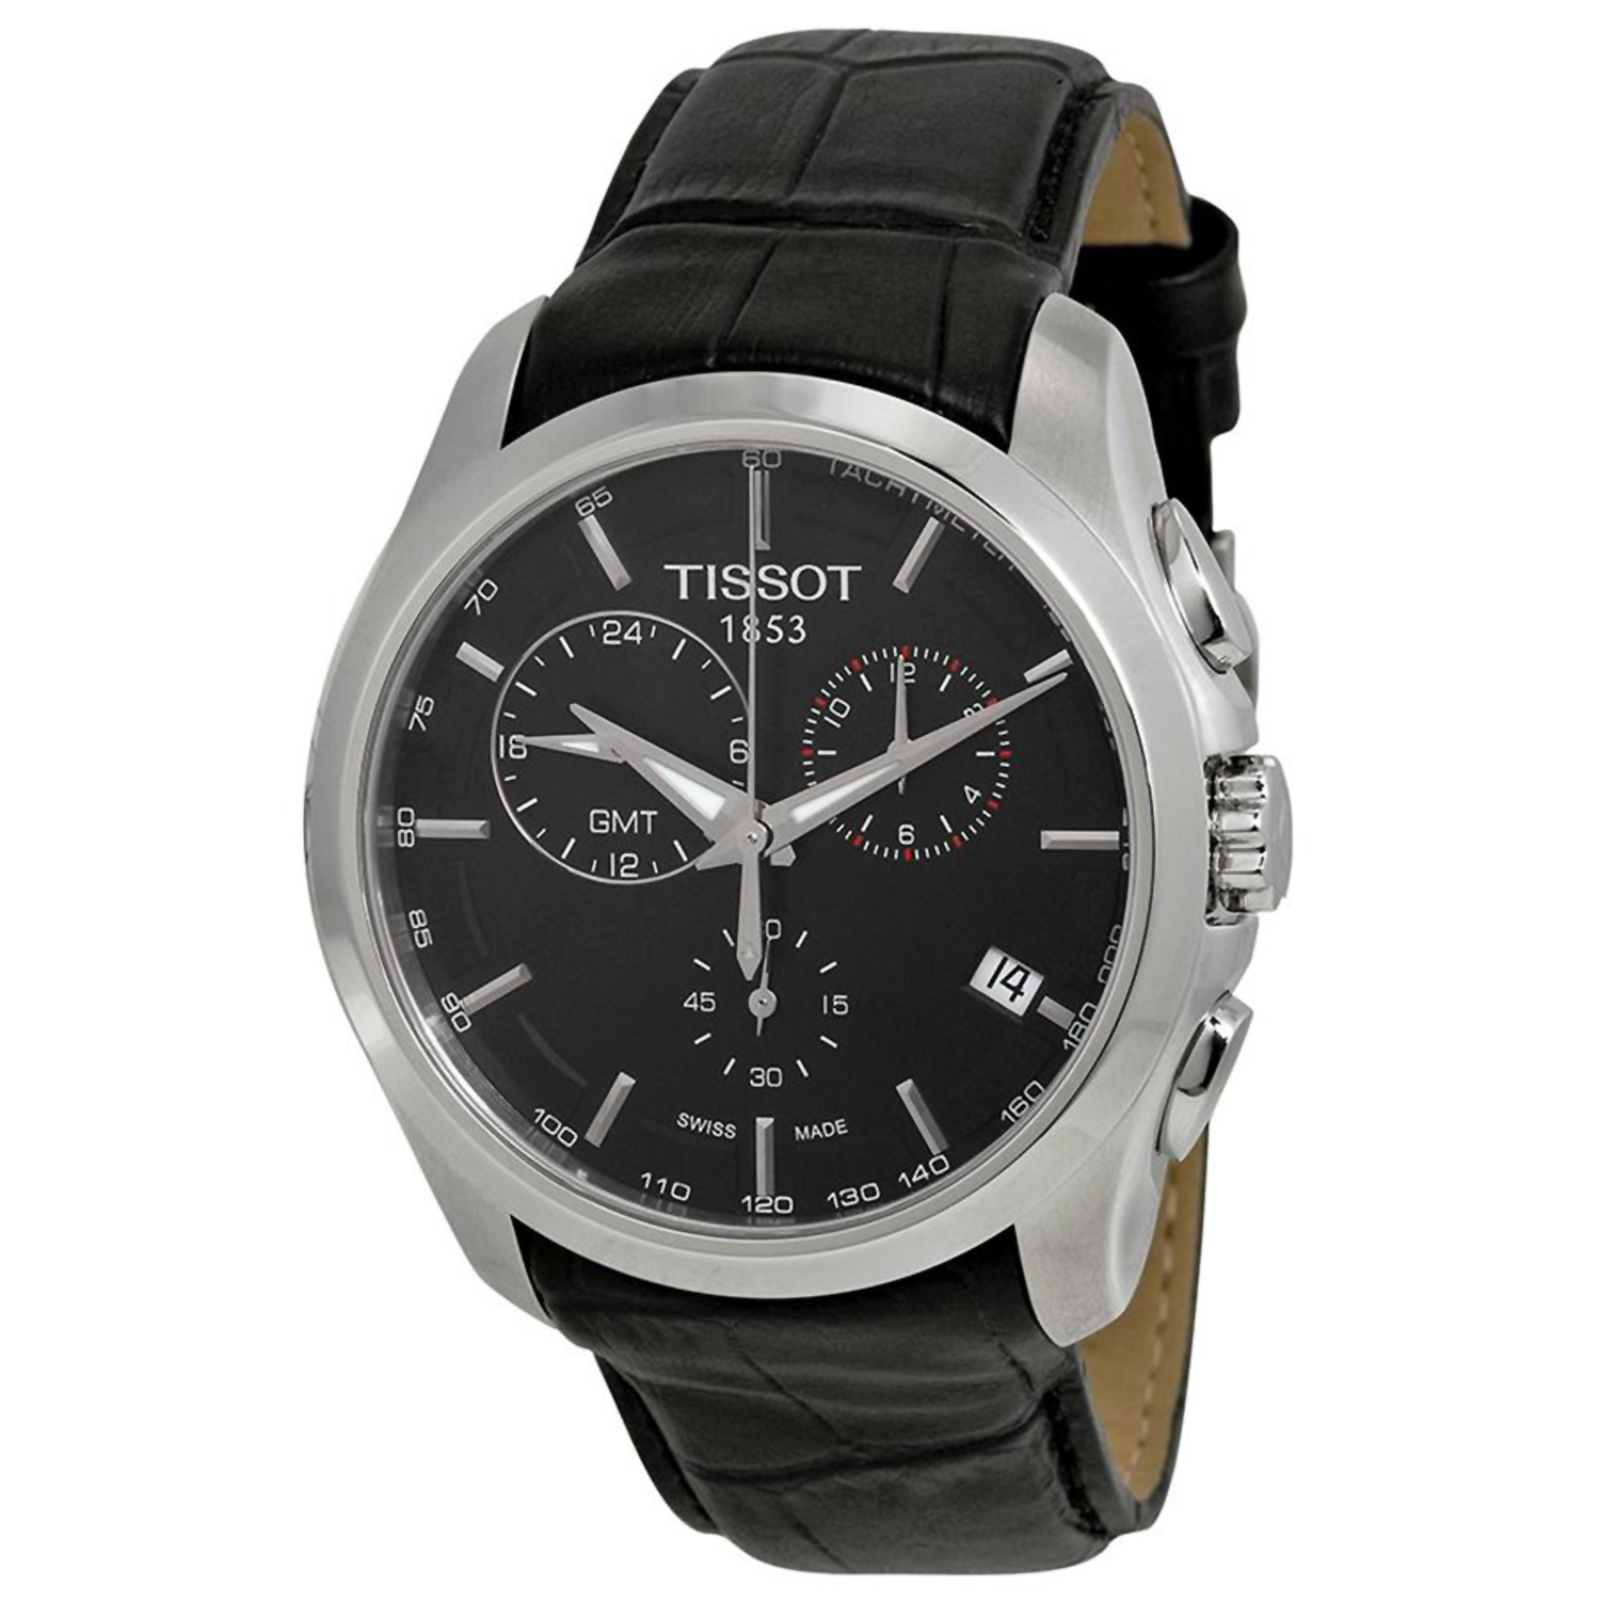 Tissot T0354391605100 Men’s T-Trend Couturier Leather Chronograph Watch - Black